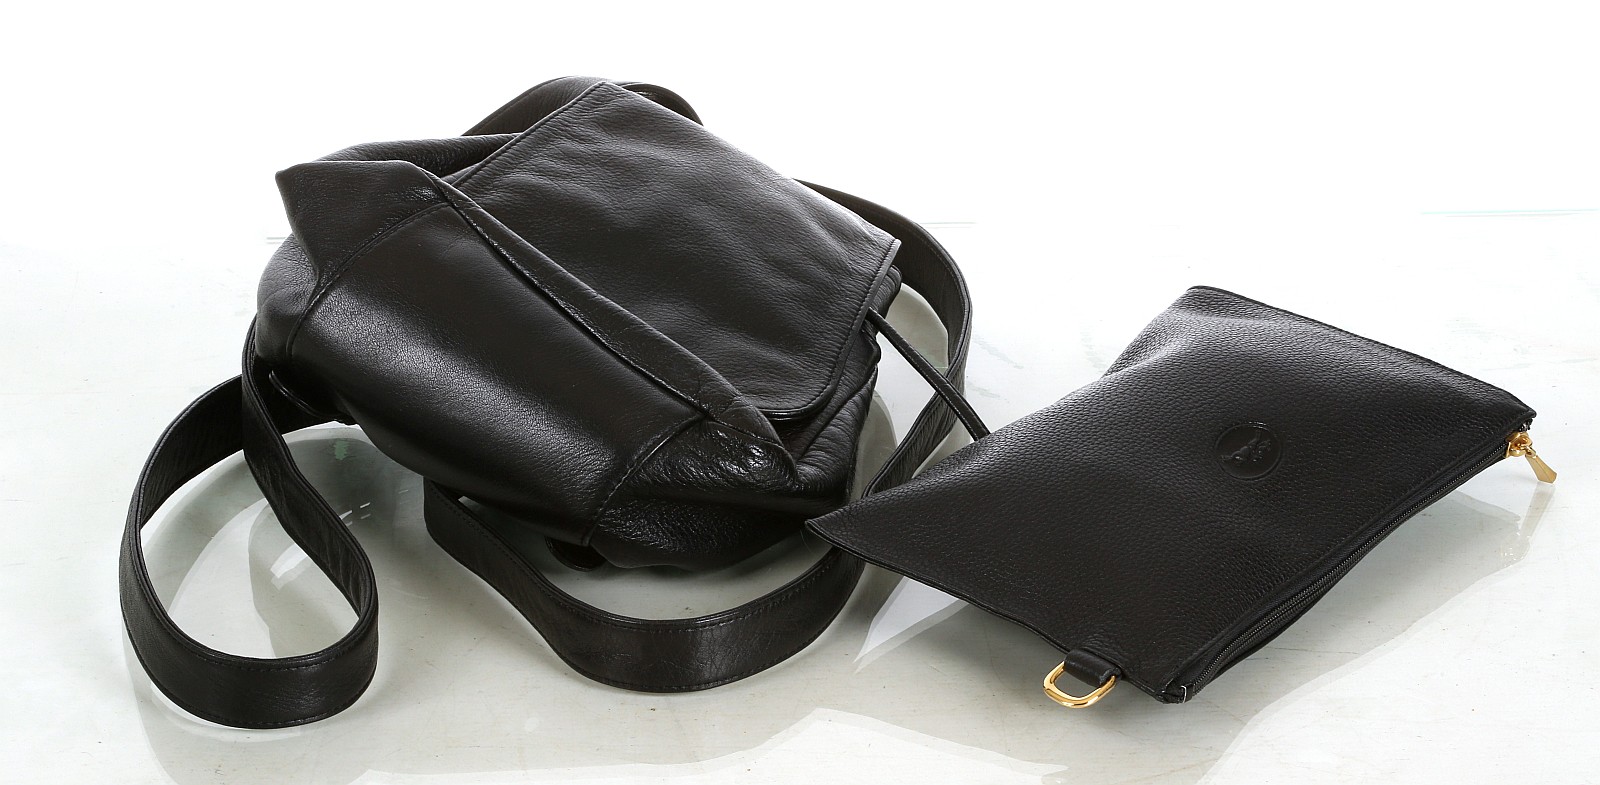 DKNY MINI BACKPACK, black leather, 23cm high, 17cm - Image 5 of 5